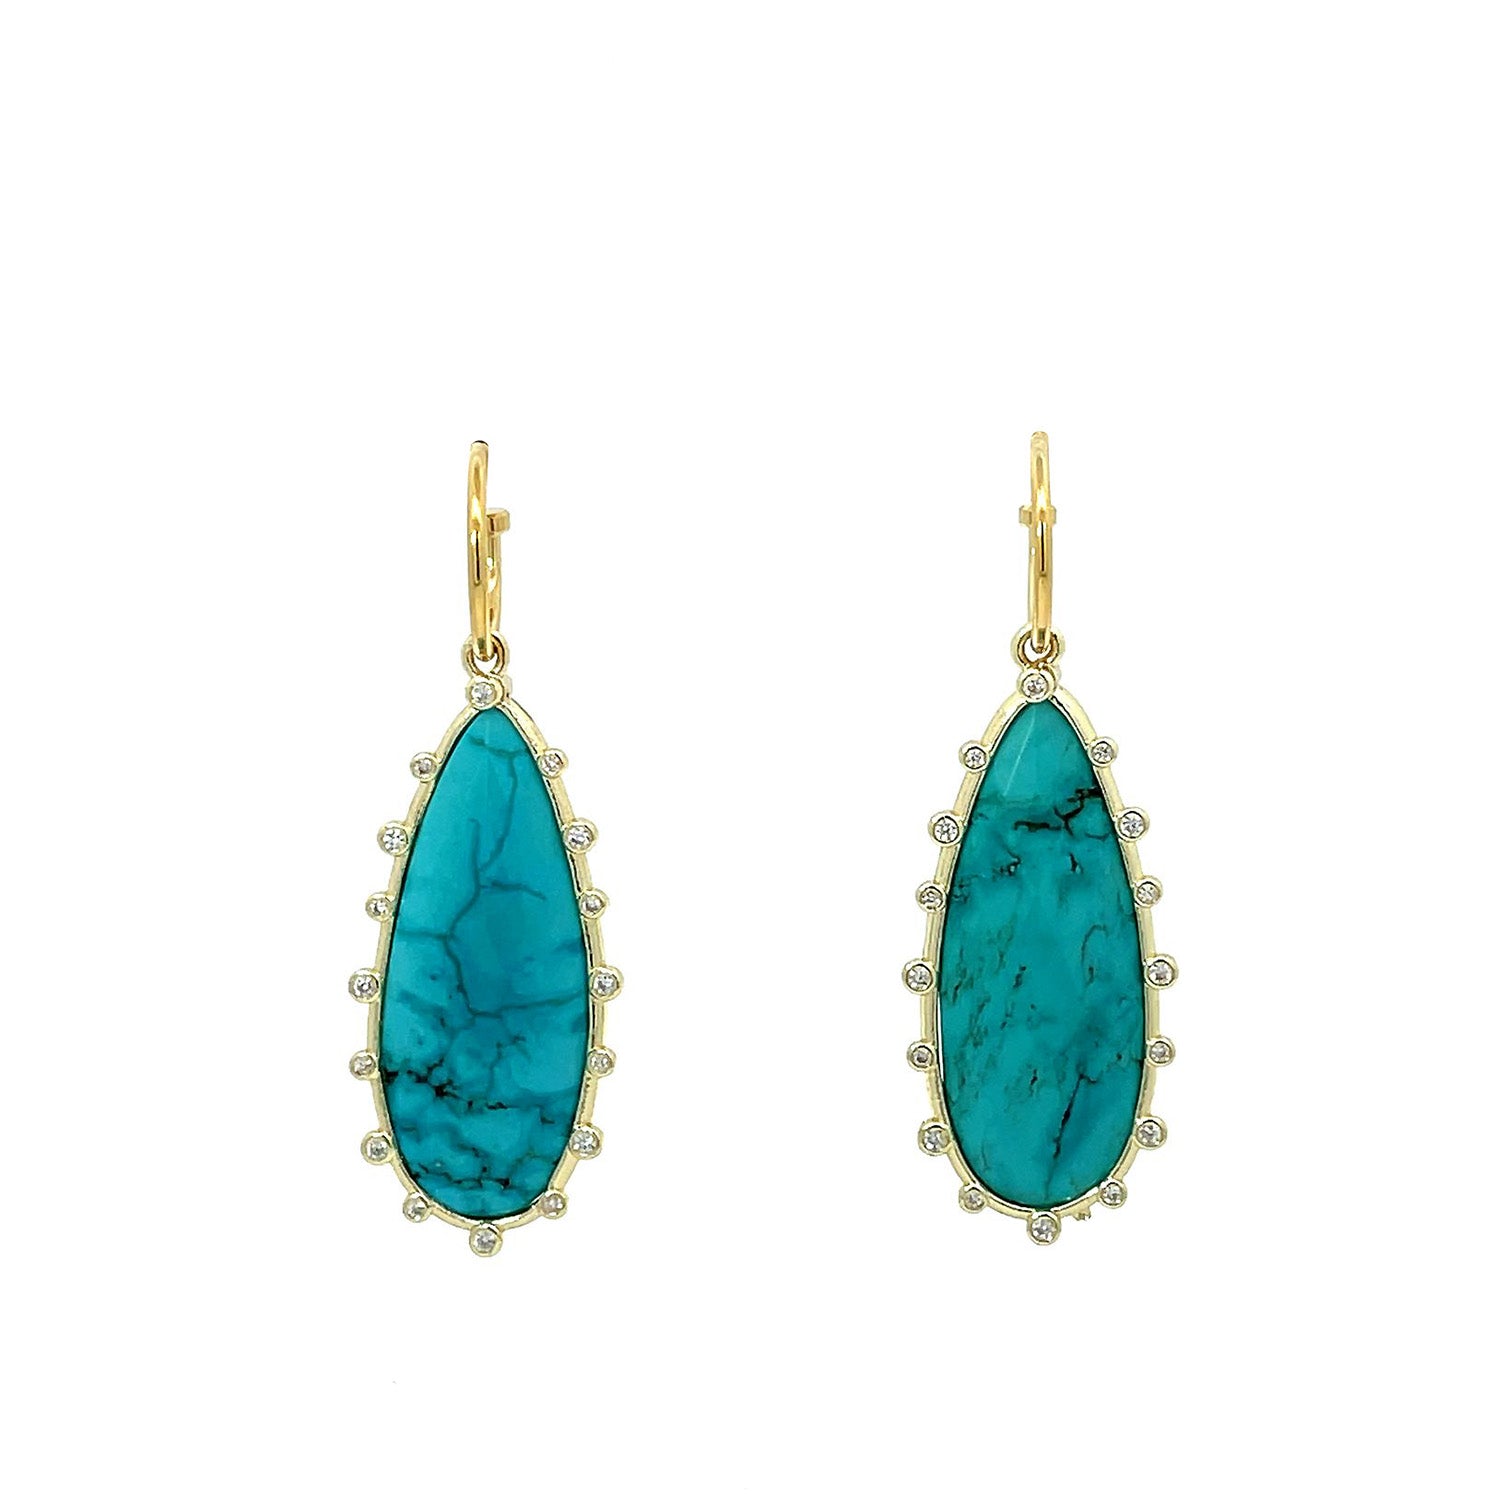 Shop Gosia Orlowska's Turquoise Drop Earrings